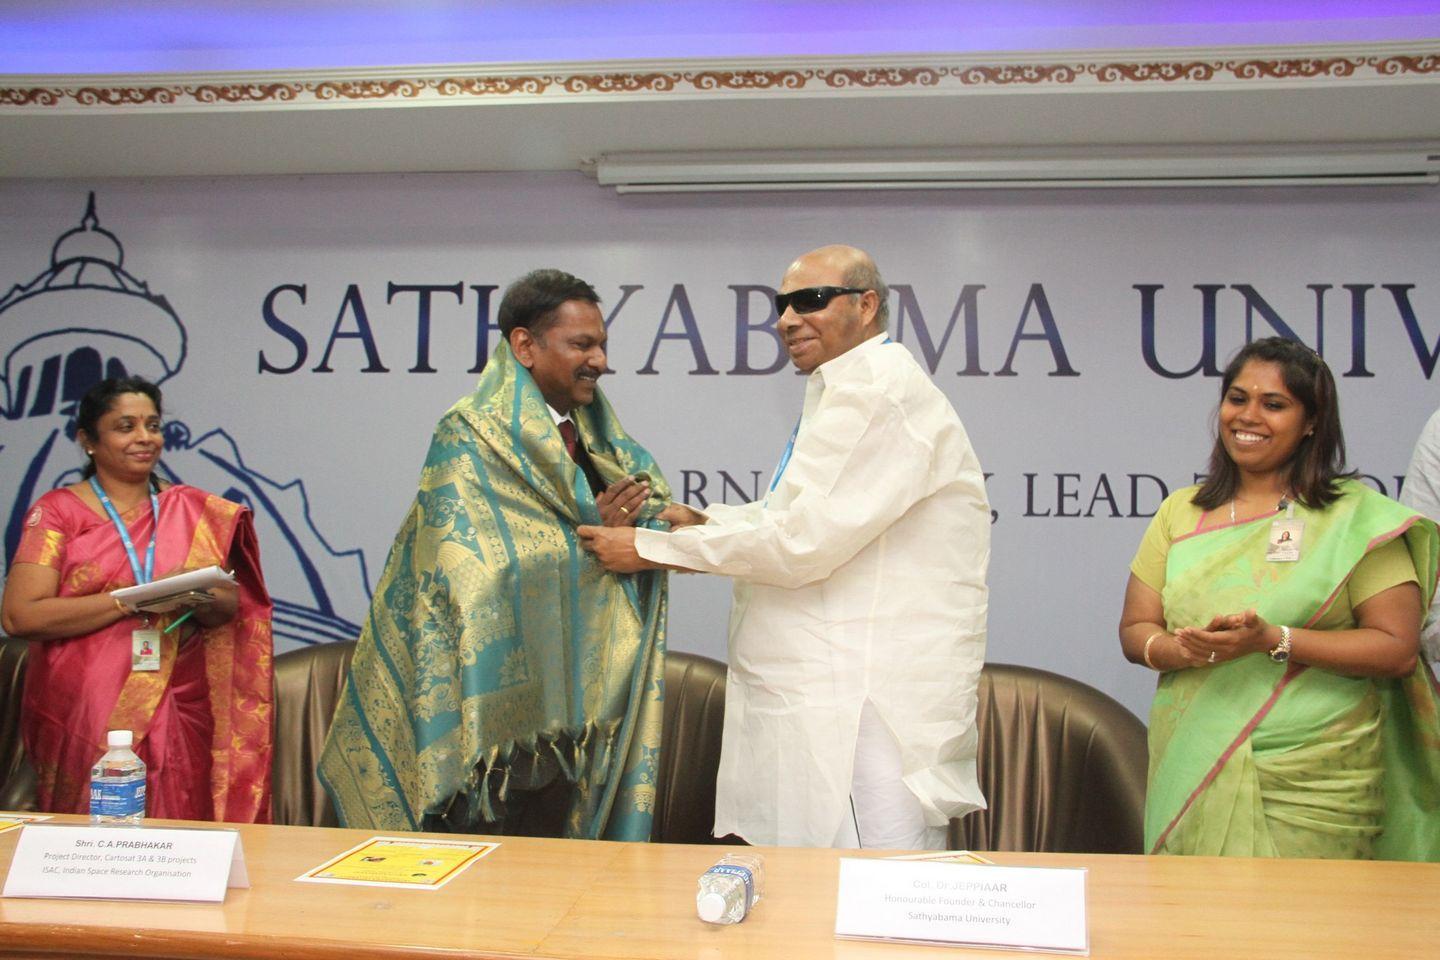 Sathyabama University Pre Launch Programme Photos